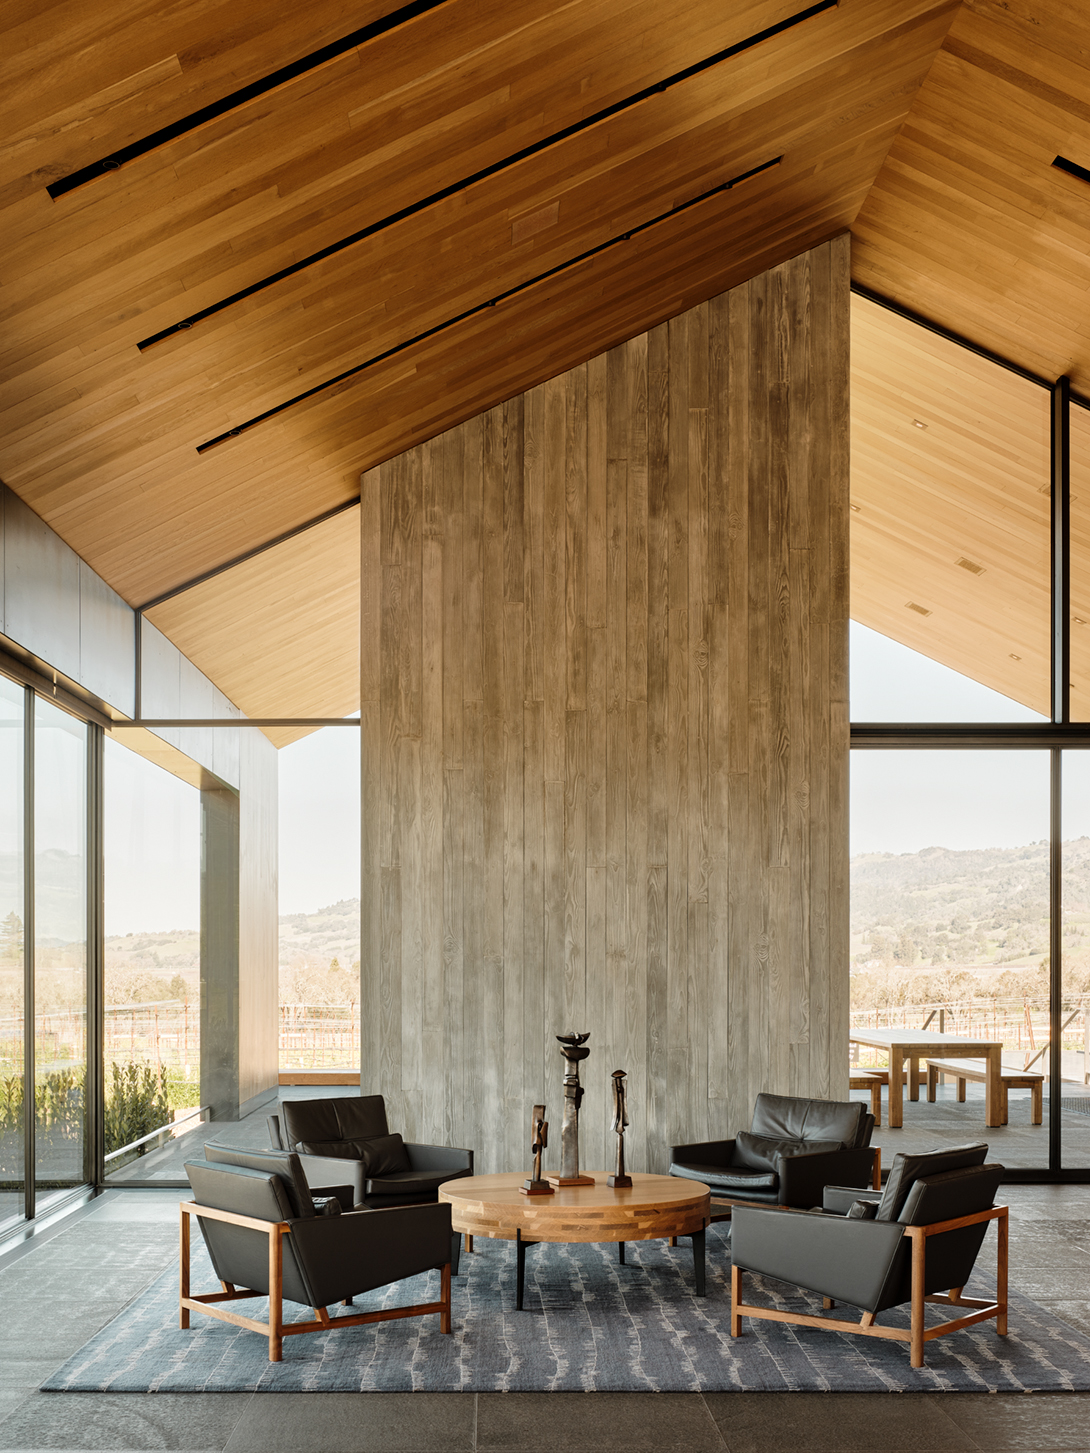 Furnishing chosen by interior designer Laurel Harrington lends a residential air.